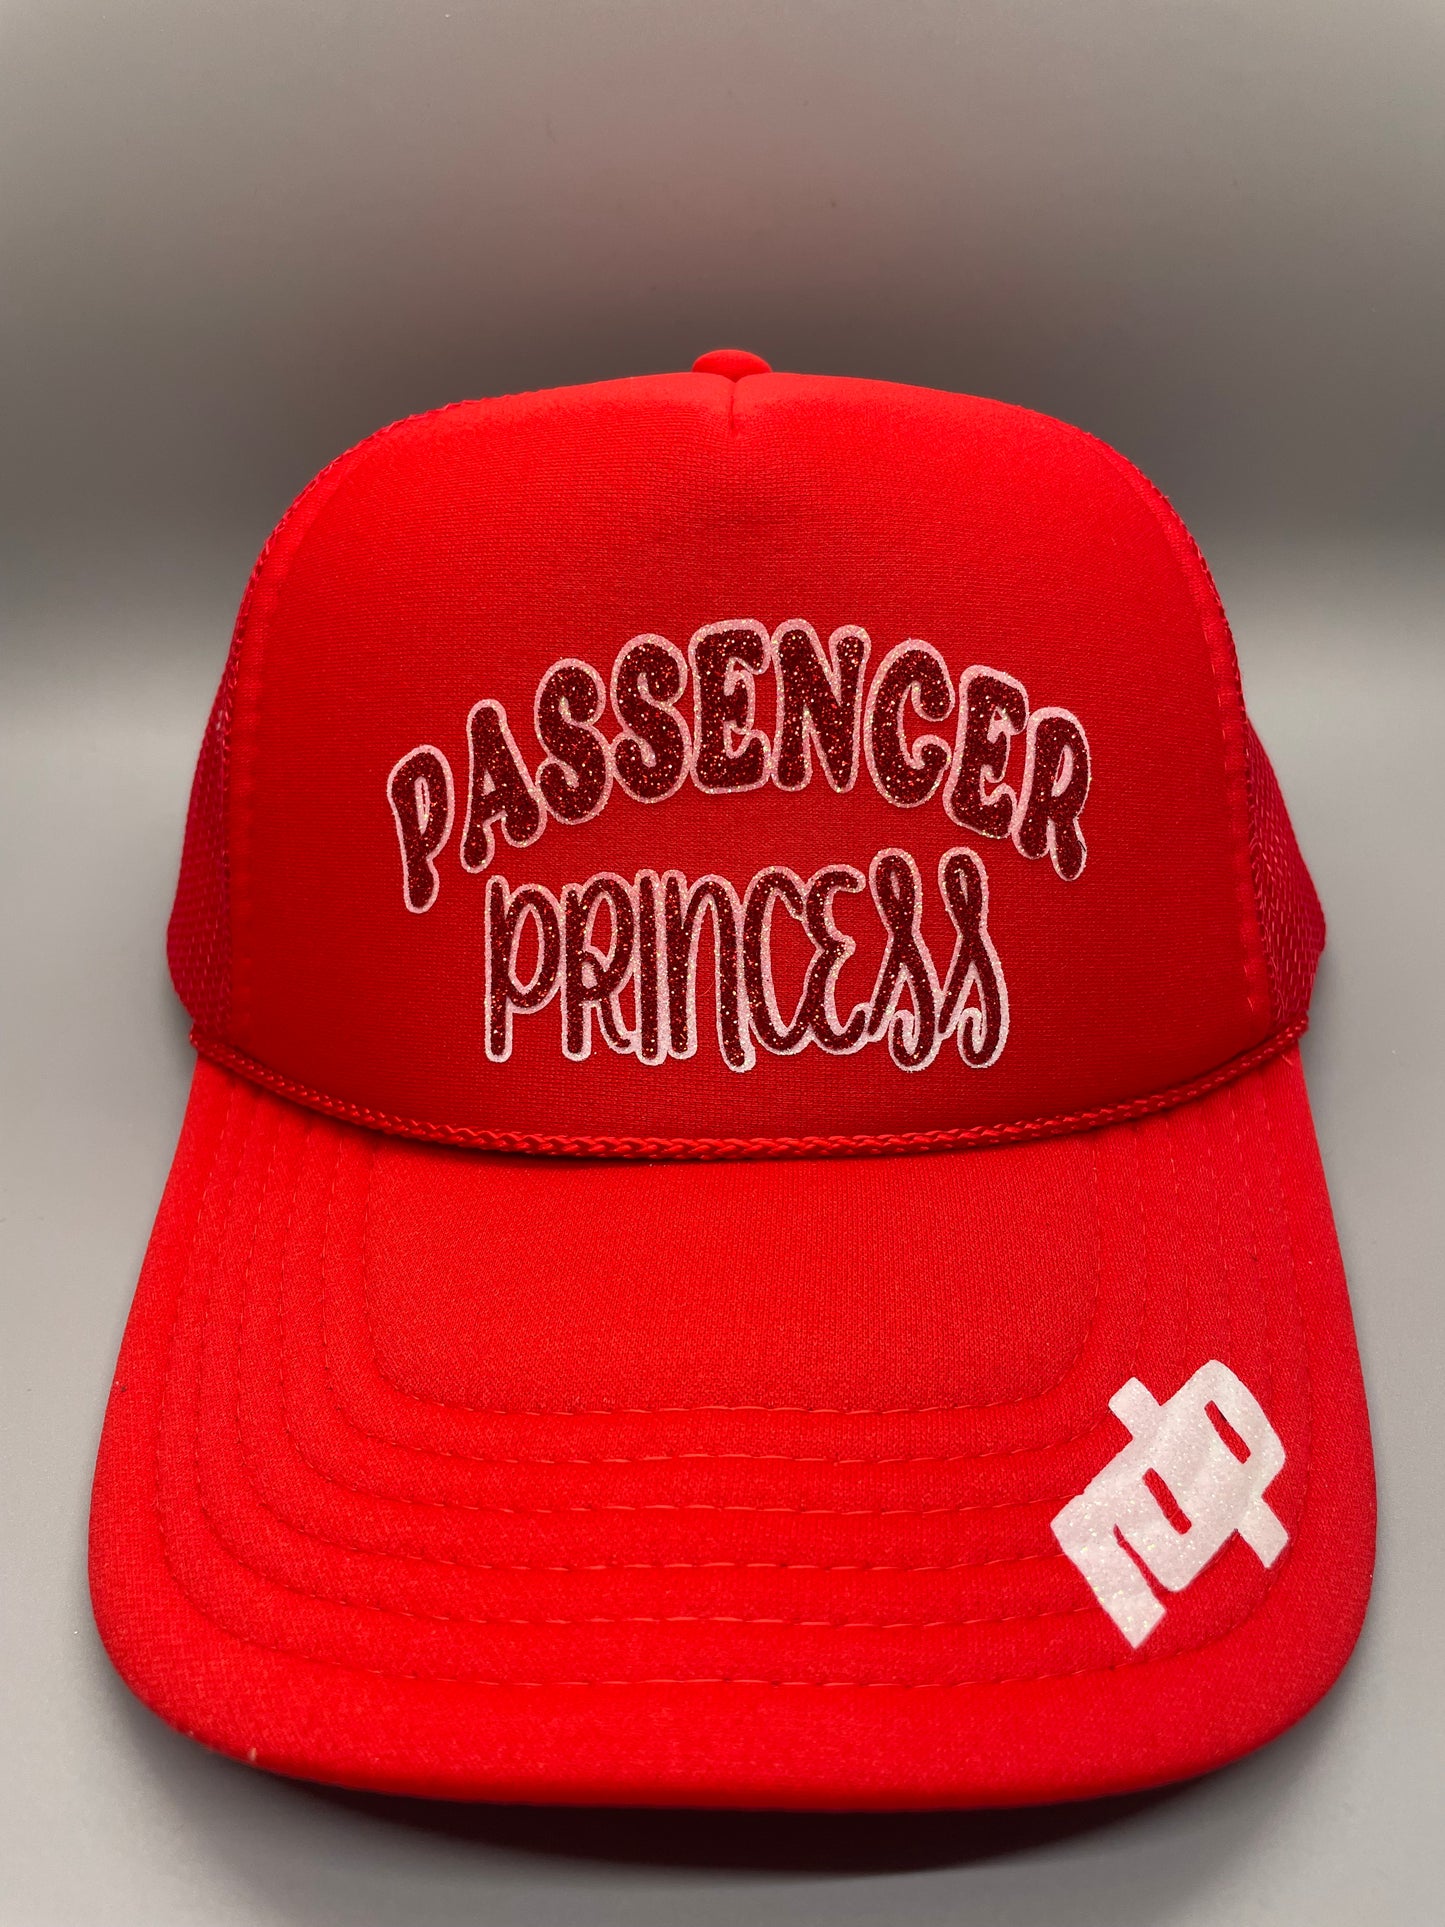 Women's 'Passenger Princess' Hat